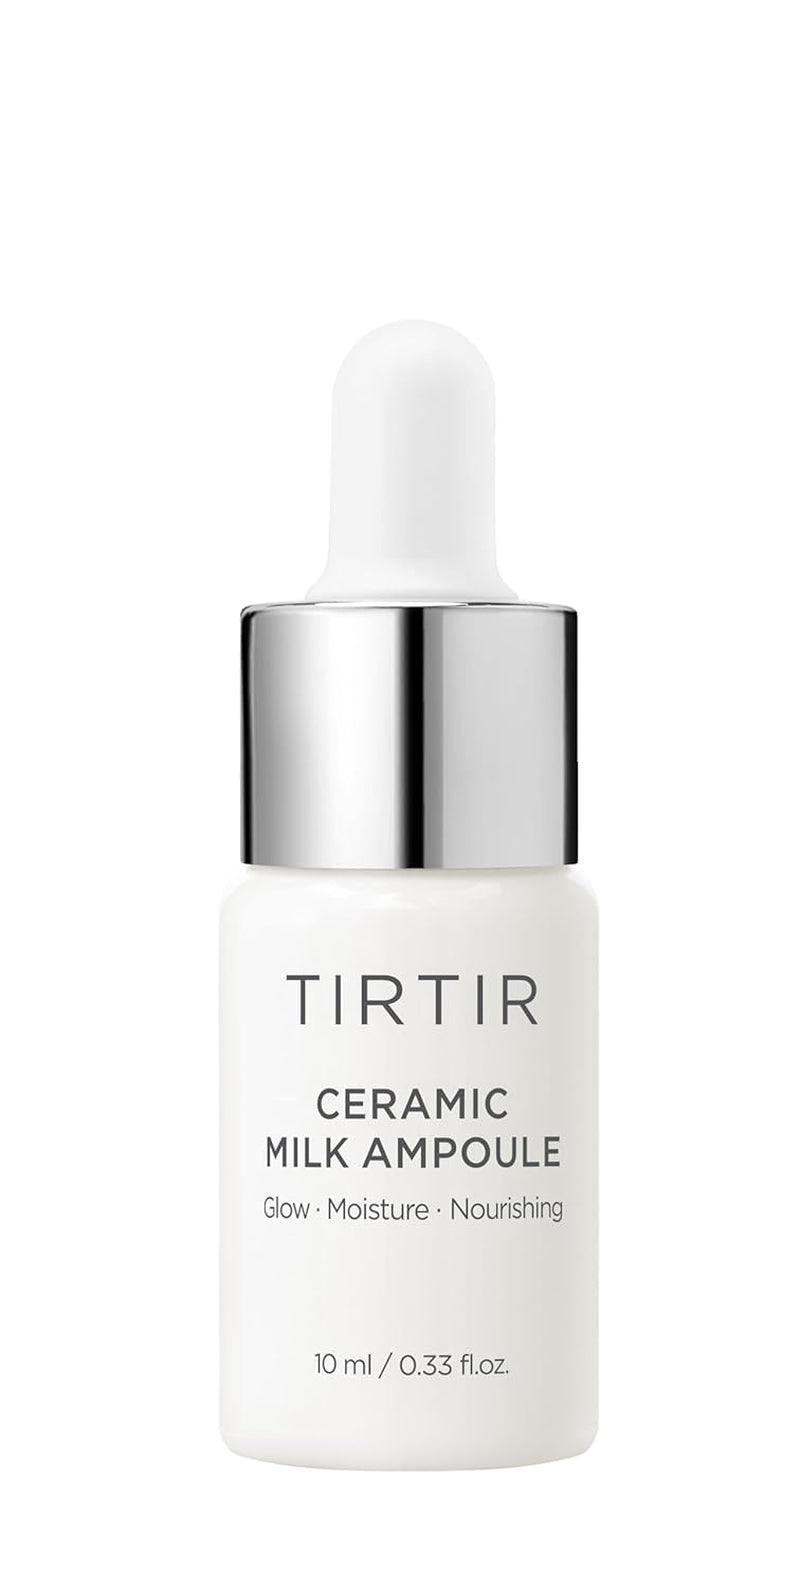 "Revitalize and Nourish Your Skin with TIRTIR Ceramic Milk Ampoule - 0.33 Fluid Ounces"